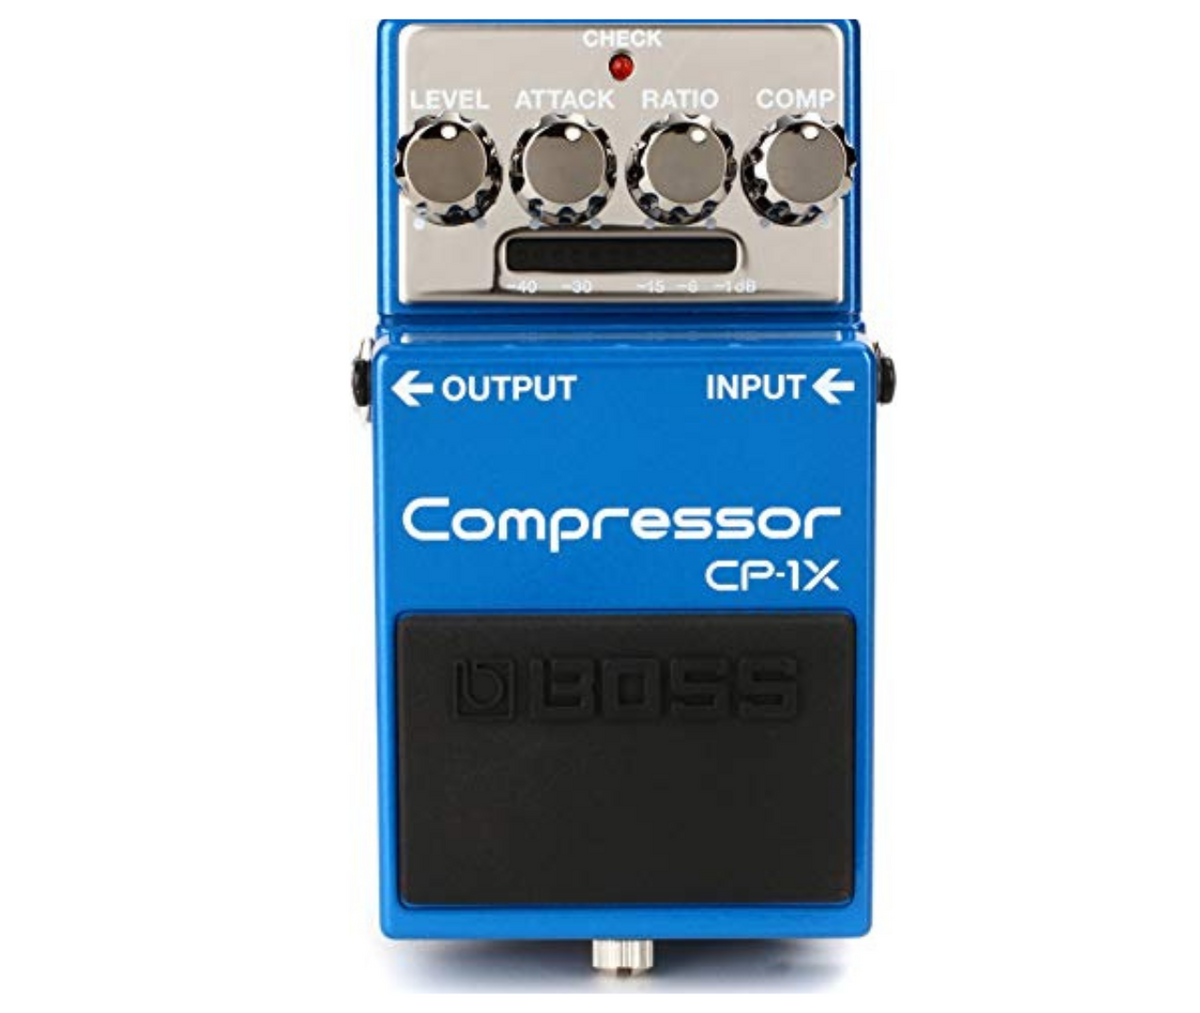 BOSS CP-1X Compressor Best Guitar Effects Pedal for All Guitar Types 18-volt Input